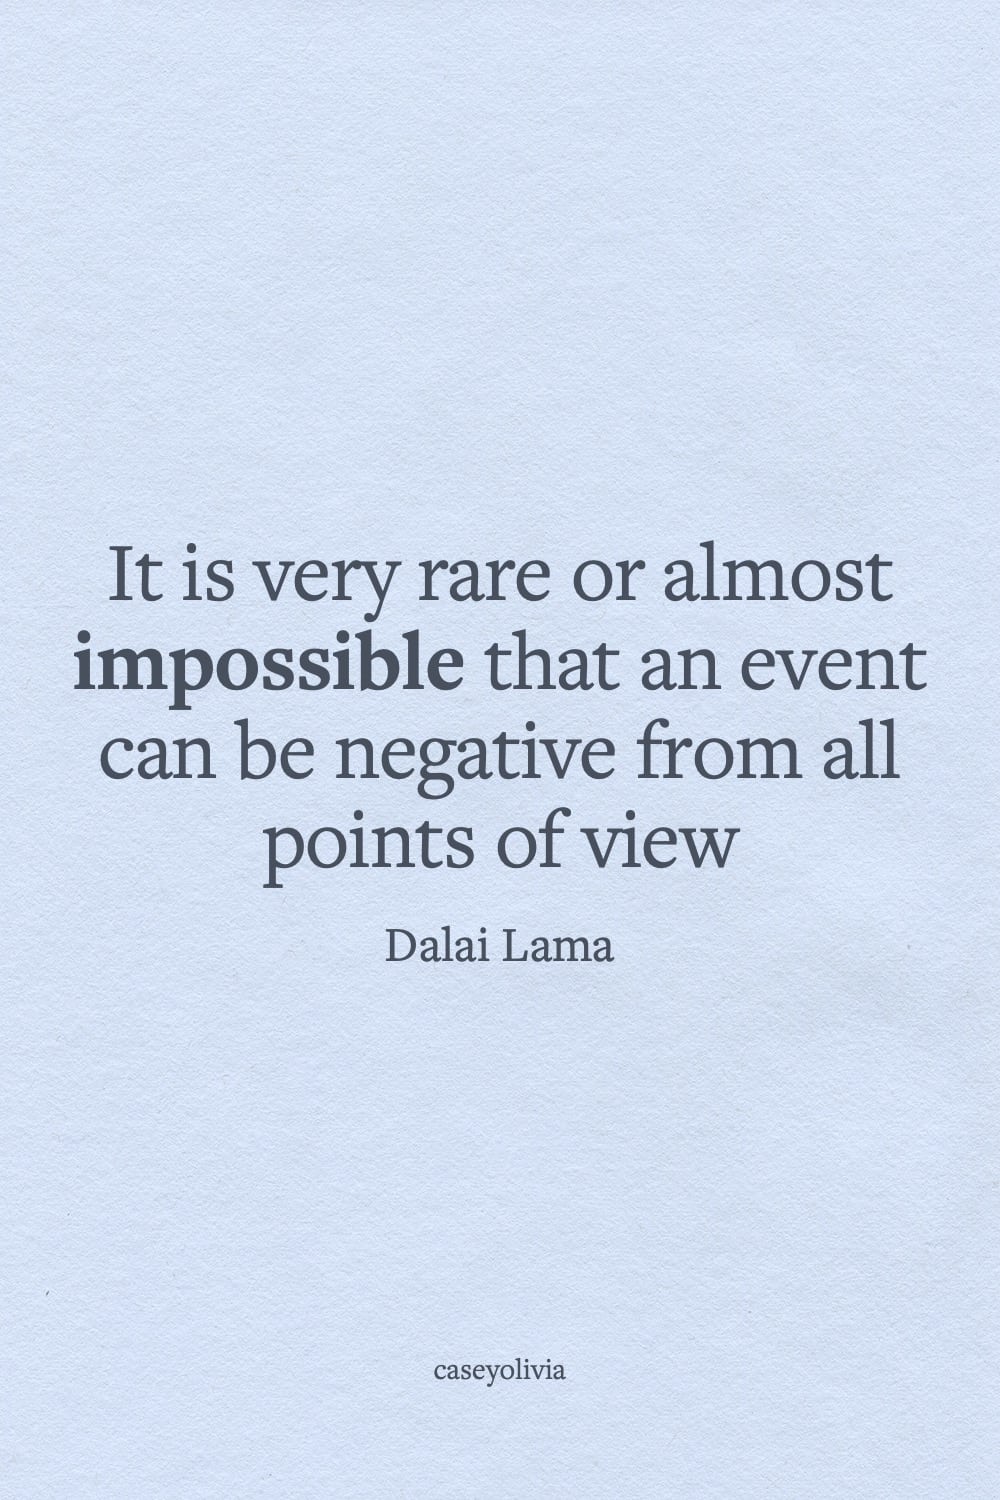 dalai lama positive thinking quote about optimism